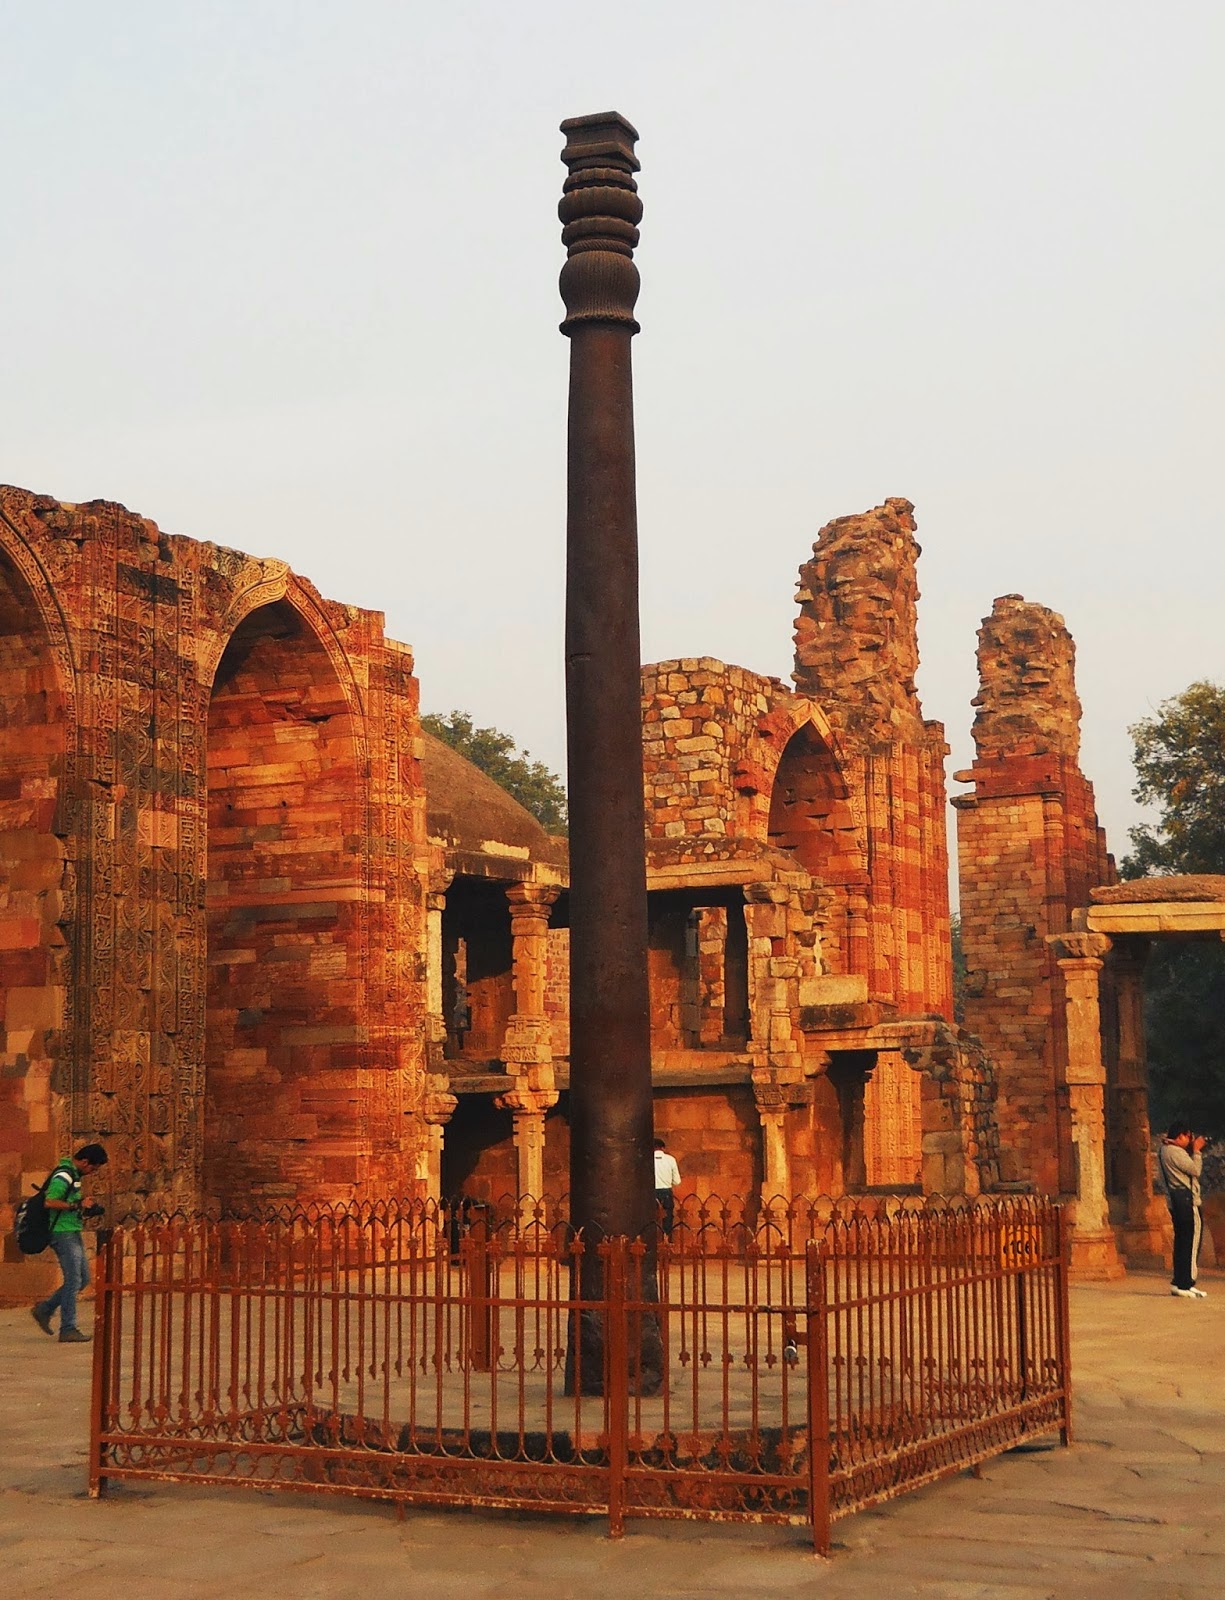 Отлитую из чистого железа. Кутб Минар железная колонна. Колонна Чандрагупты, Индия. Железный столб Дели. Железная колонна в Индии.